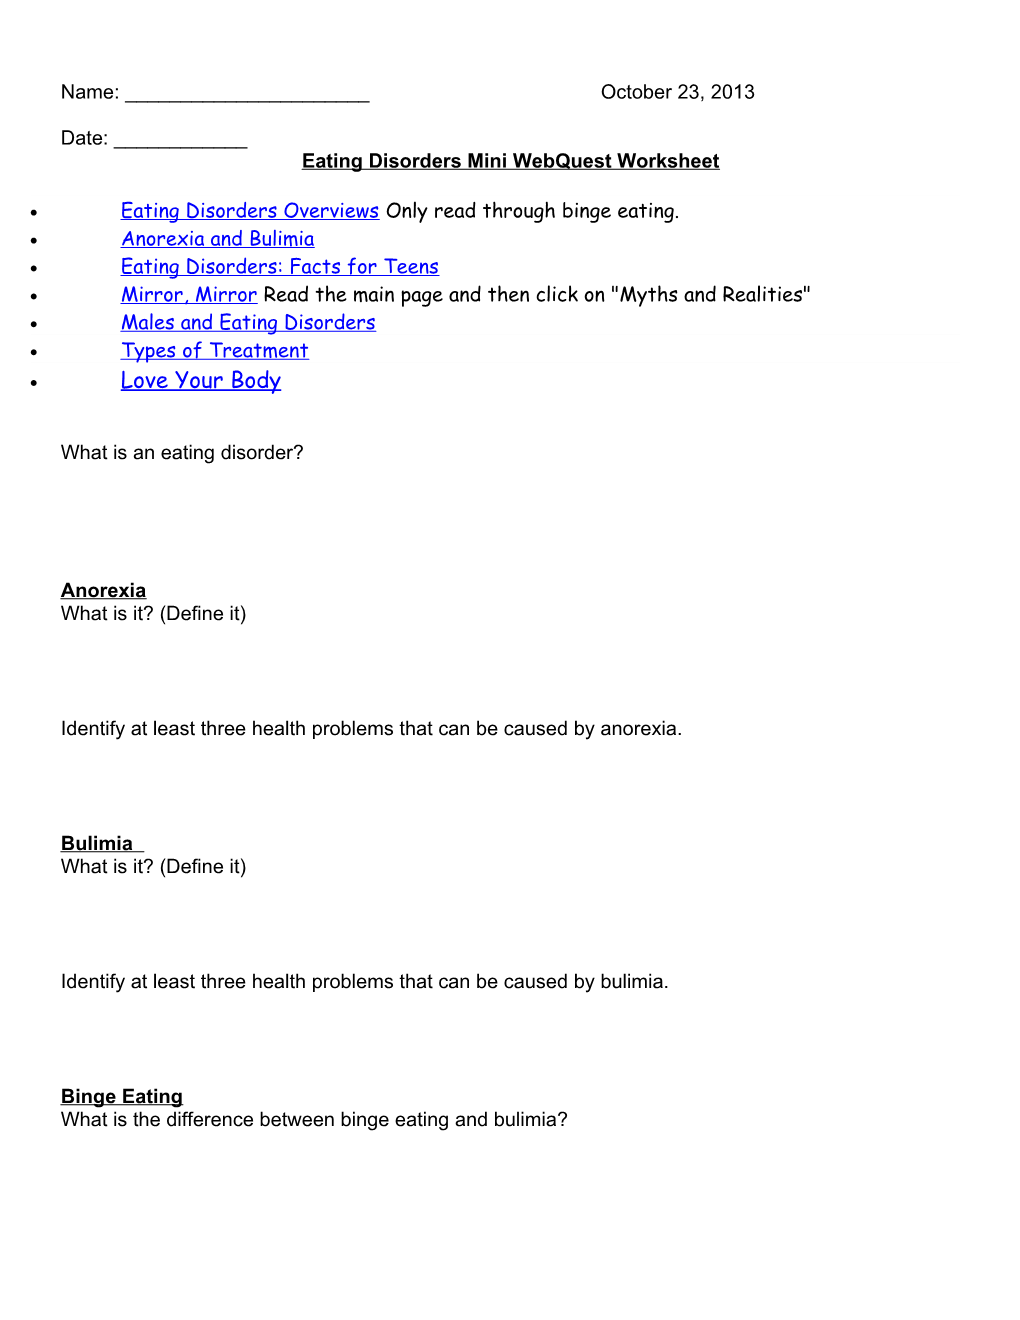 Eating Disorders Mini Webquest Worksheet